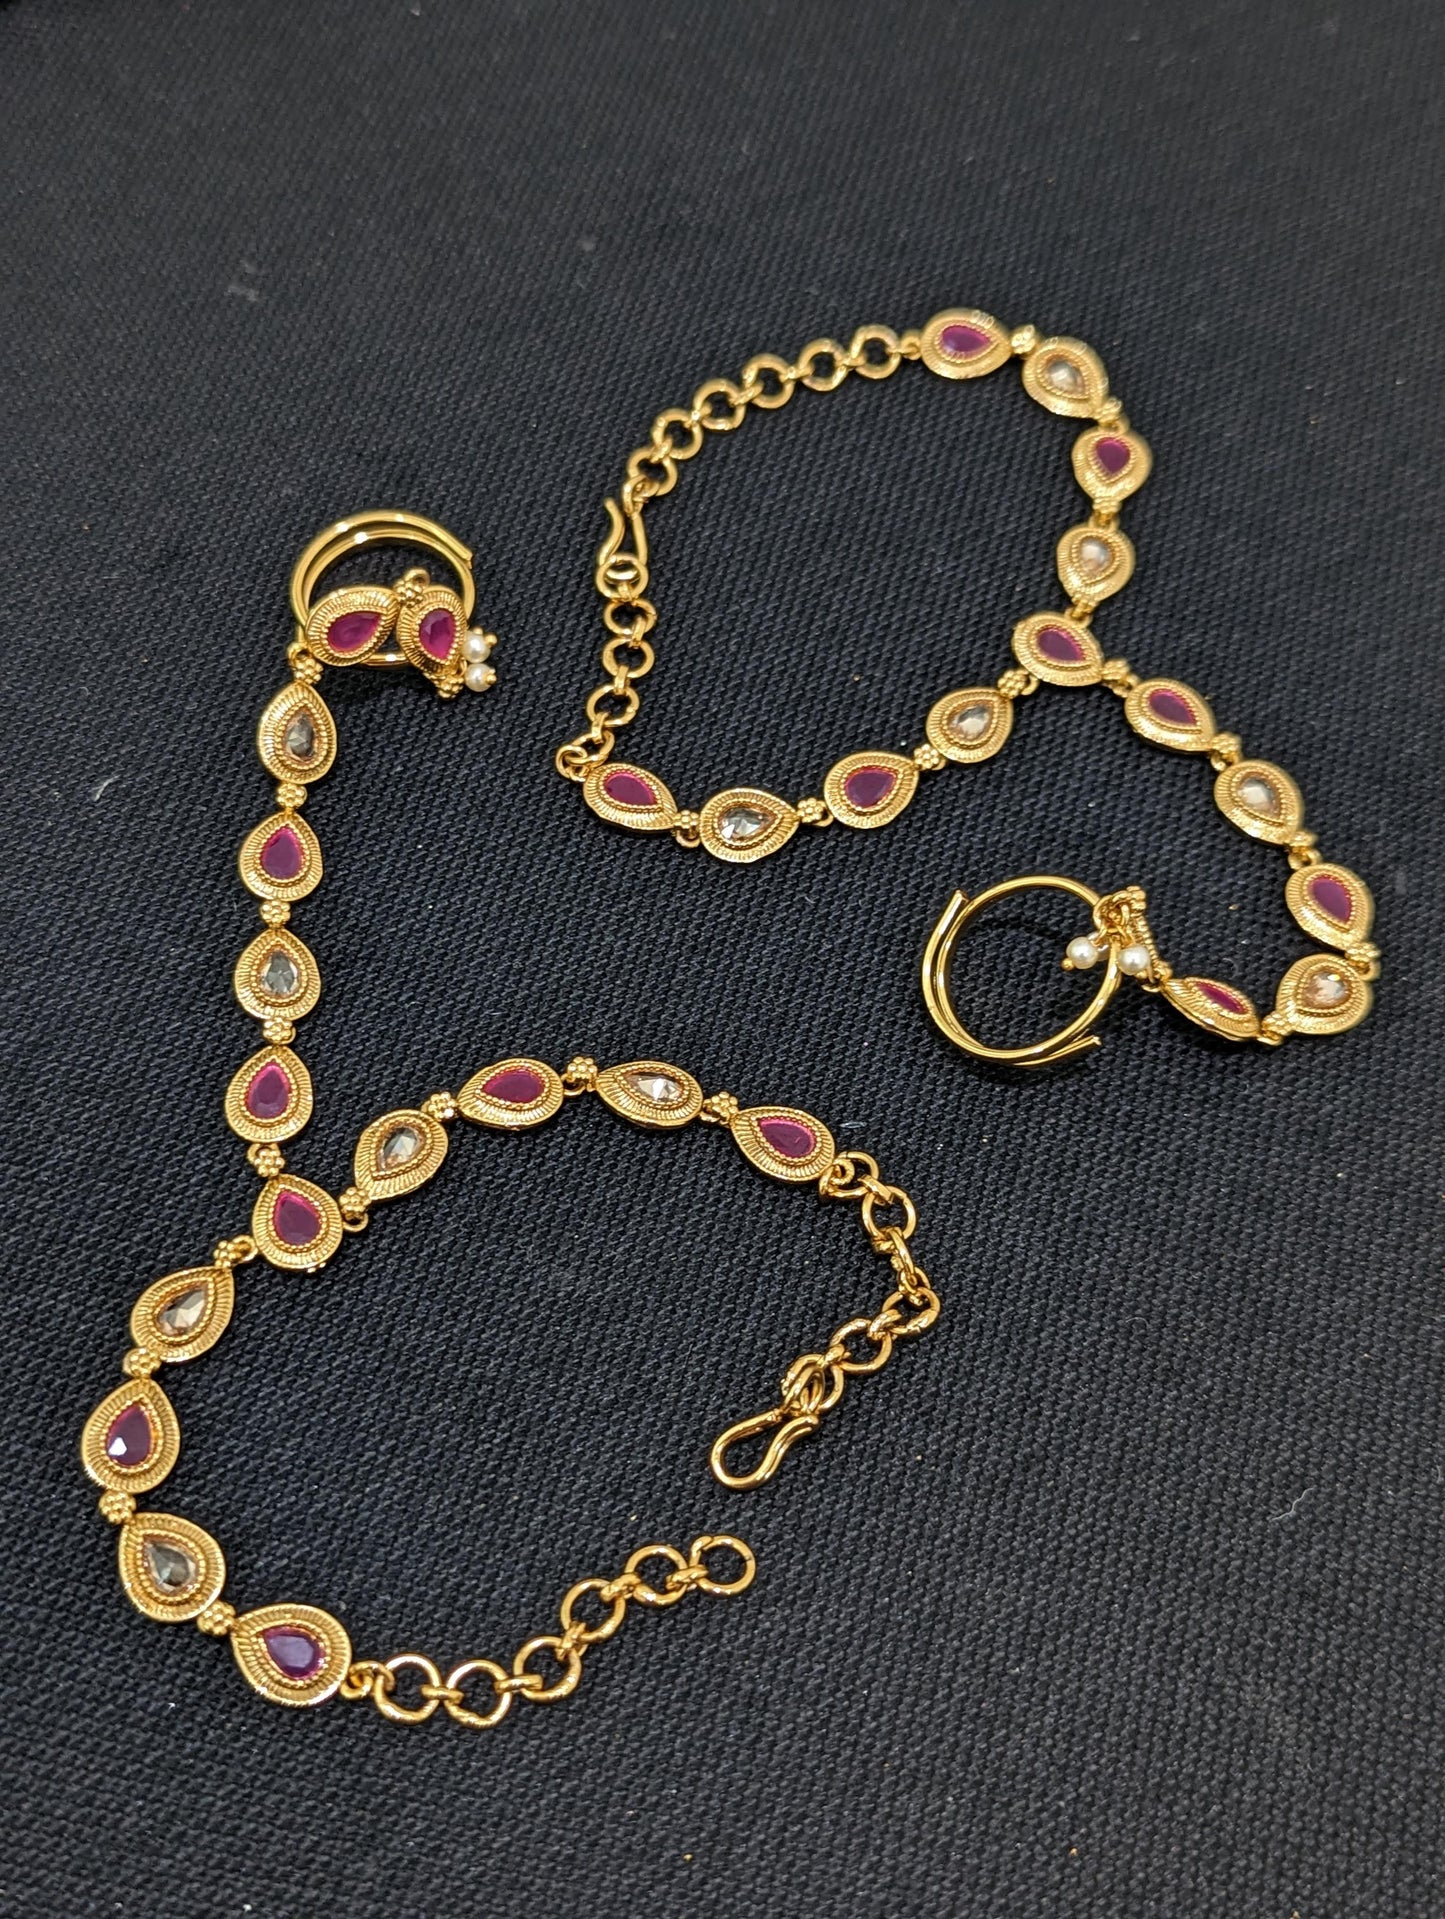 Polki Haath Phool / Bracelet Ring Combo / Ring Chain Bracelet / Indian Wedding Jewelry - D6